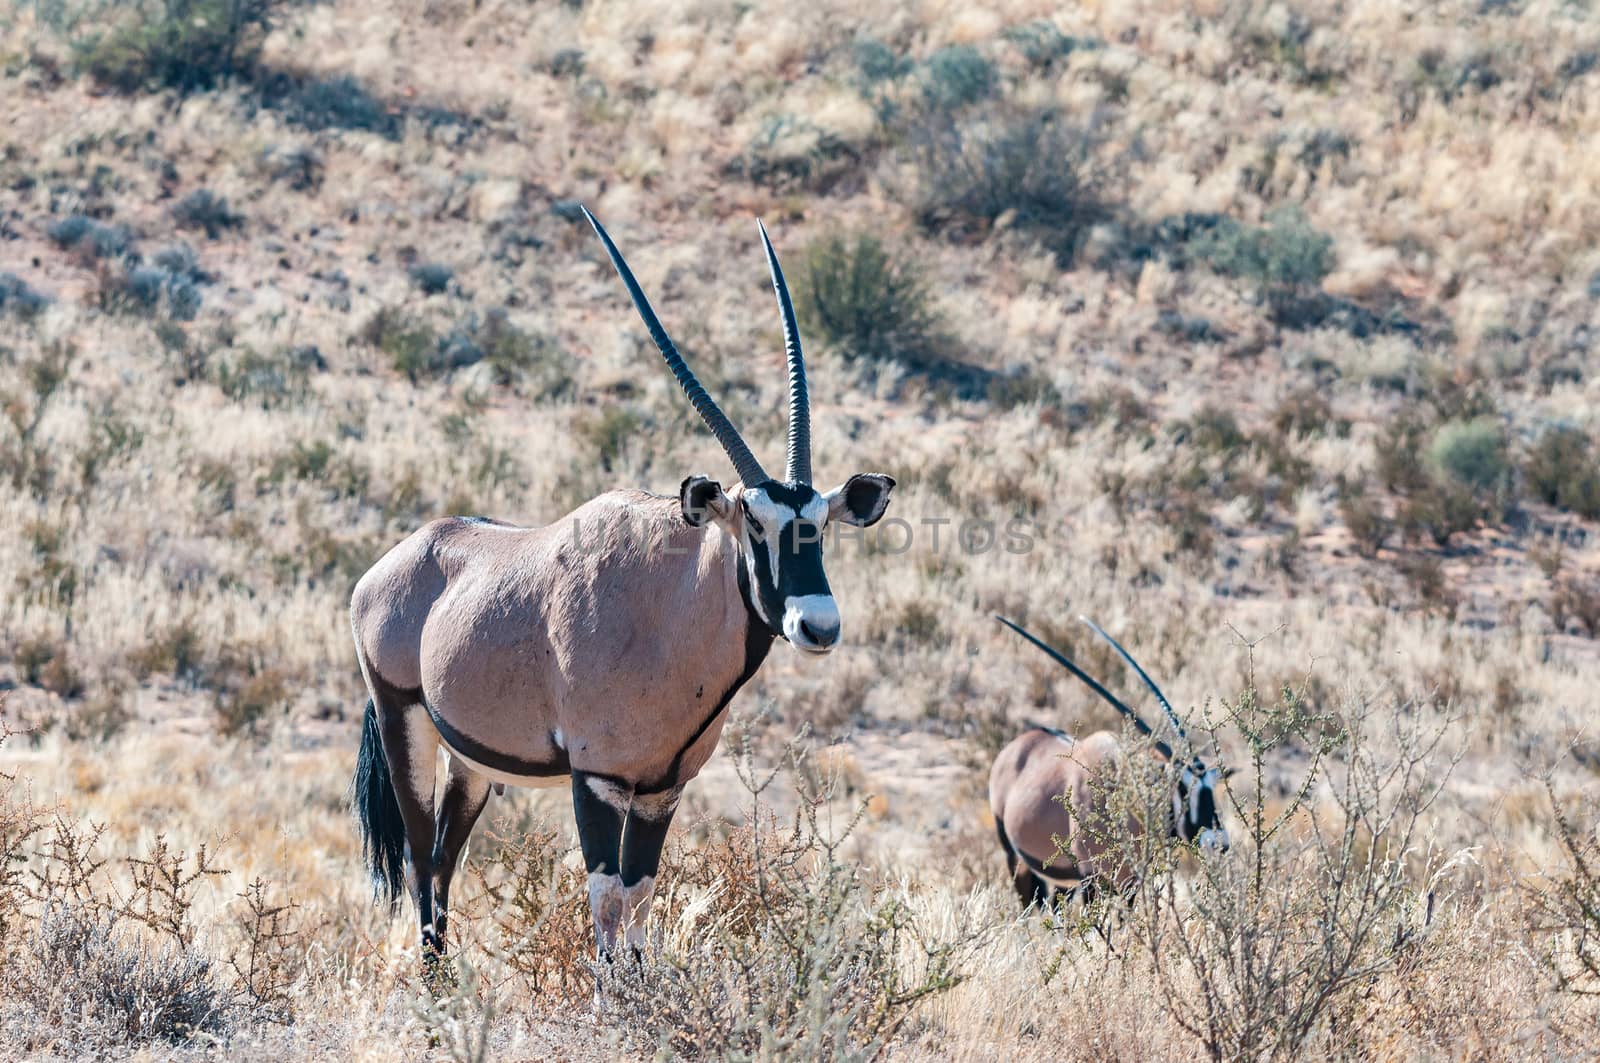 Oryx in the arid Kgalagadi by dpreezg